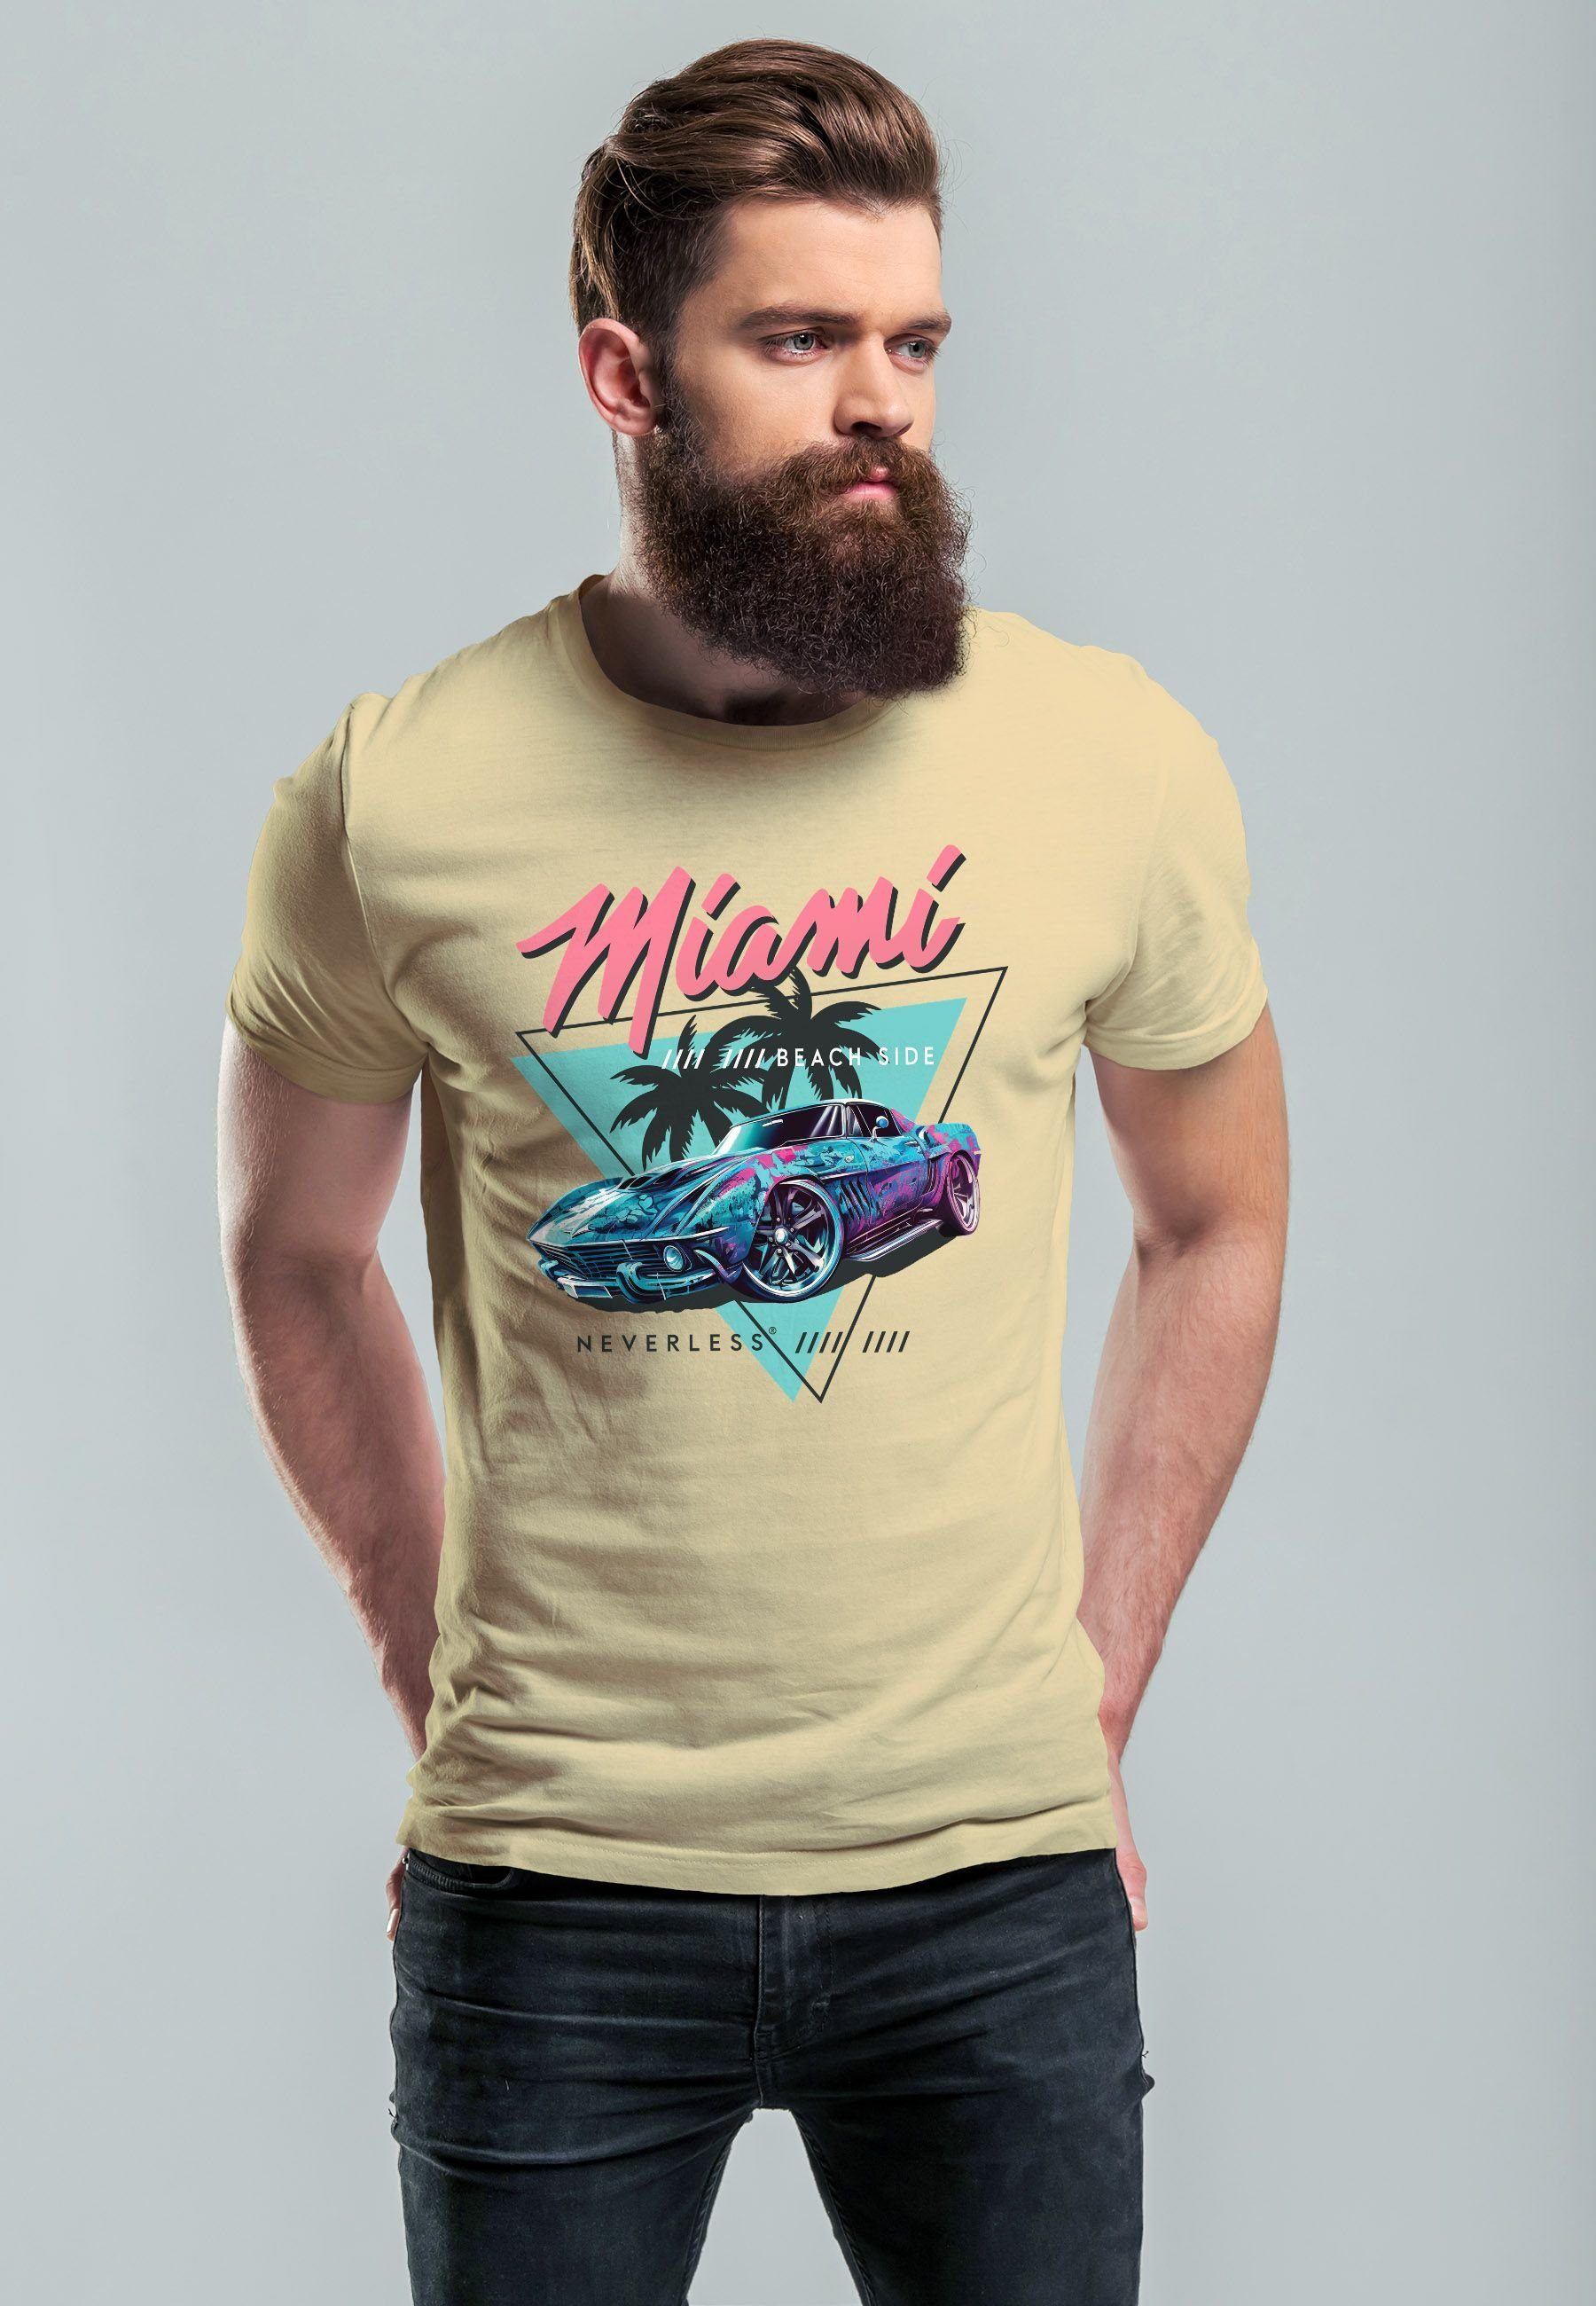 Neverless Print-Shirt Herren Retro T-Shirt Bedruckt Automobil Print USA mit Surfing Beach Motiv Miami natur